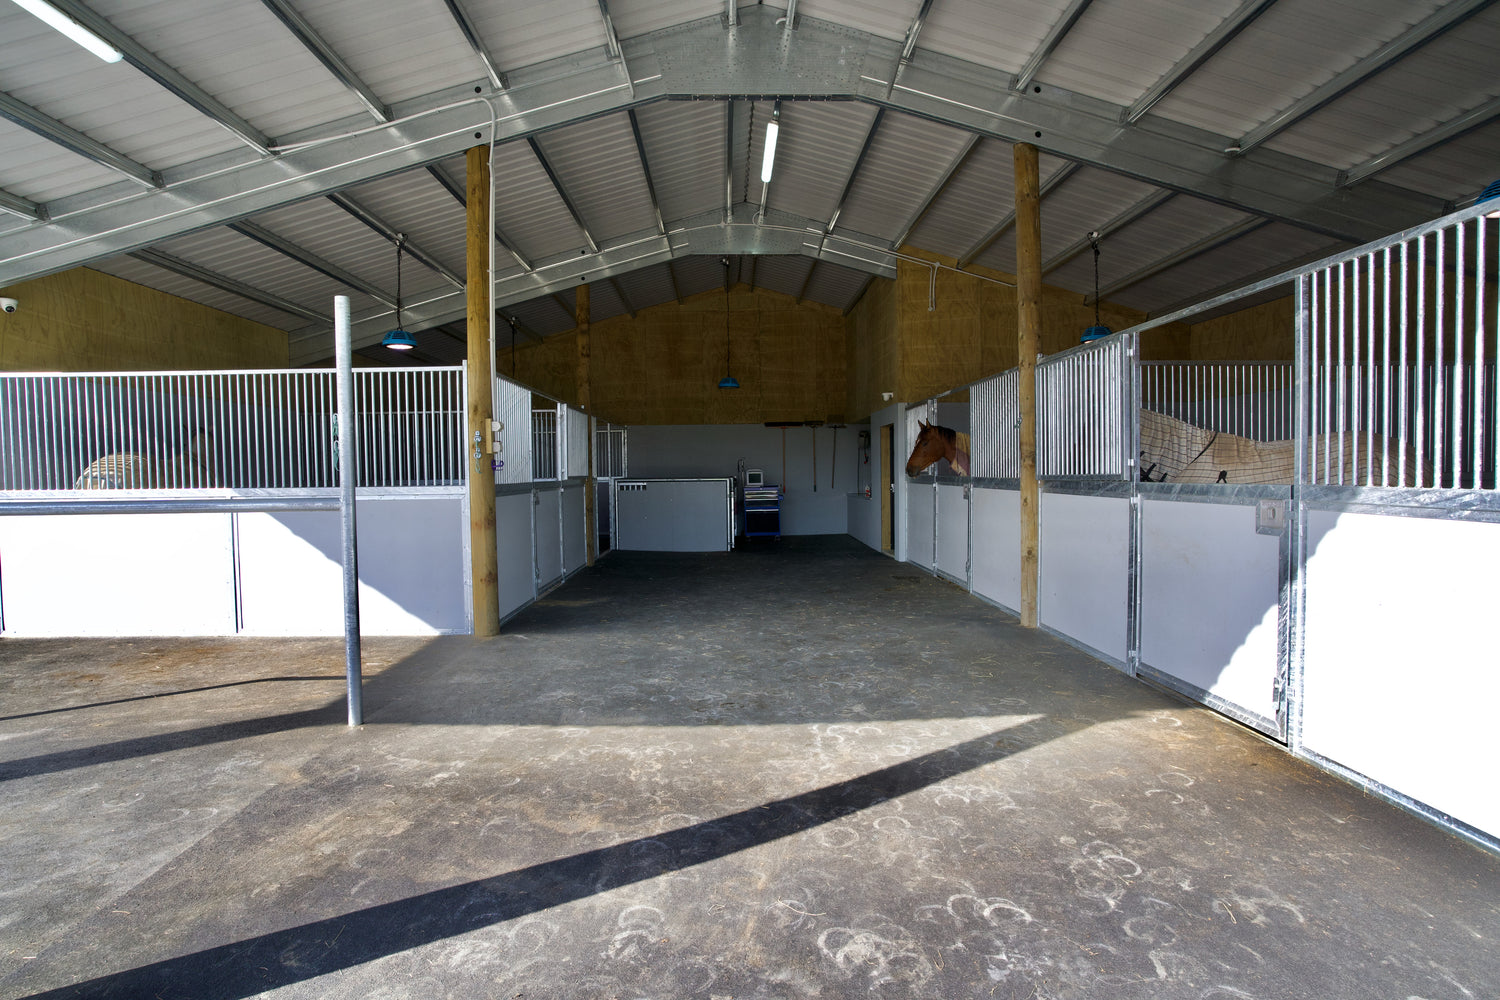 Breeding stables